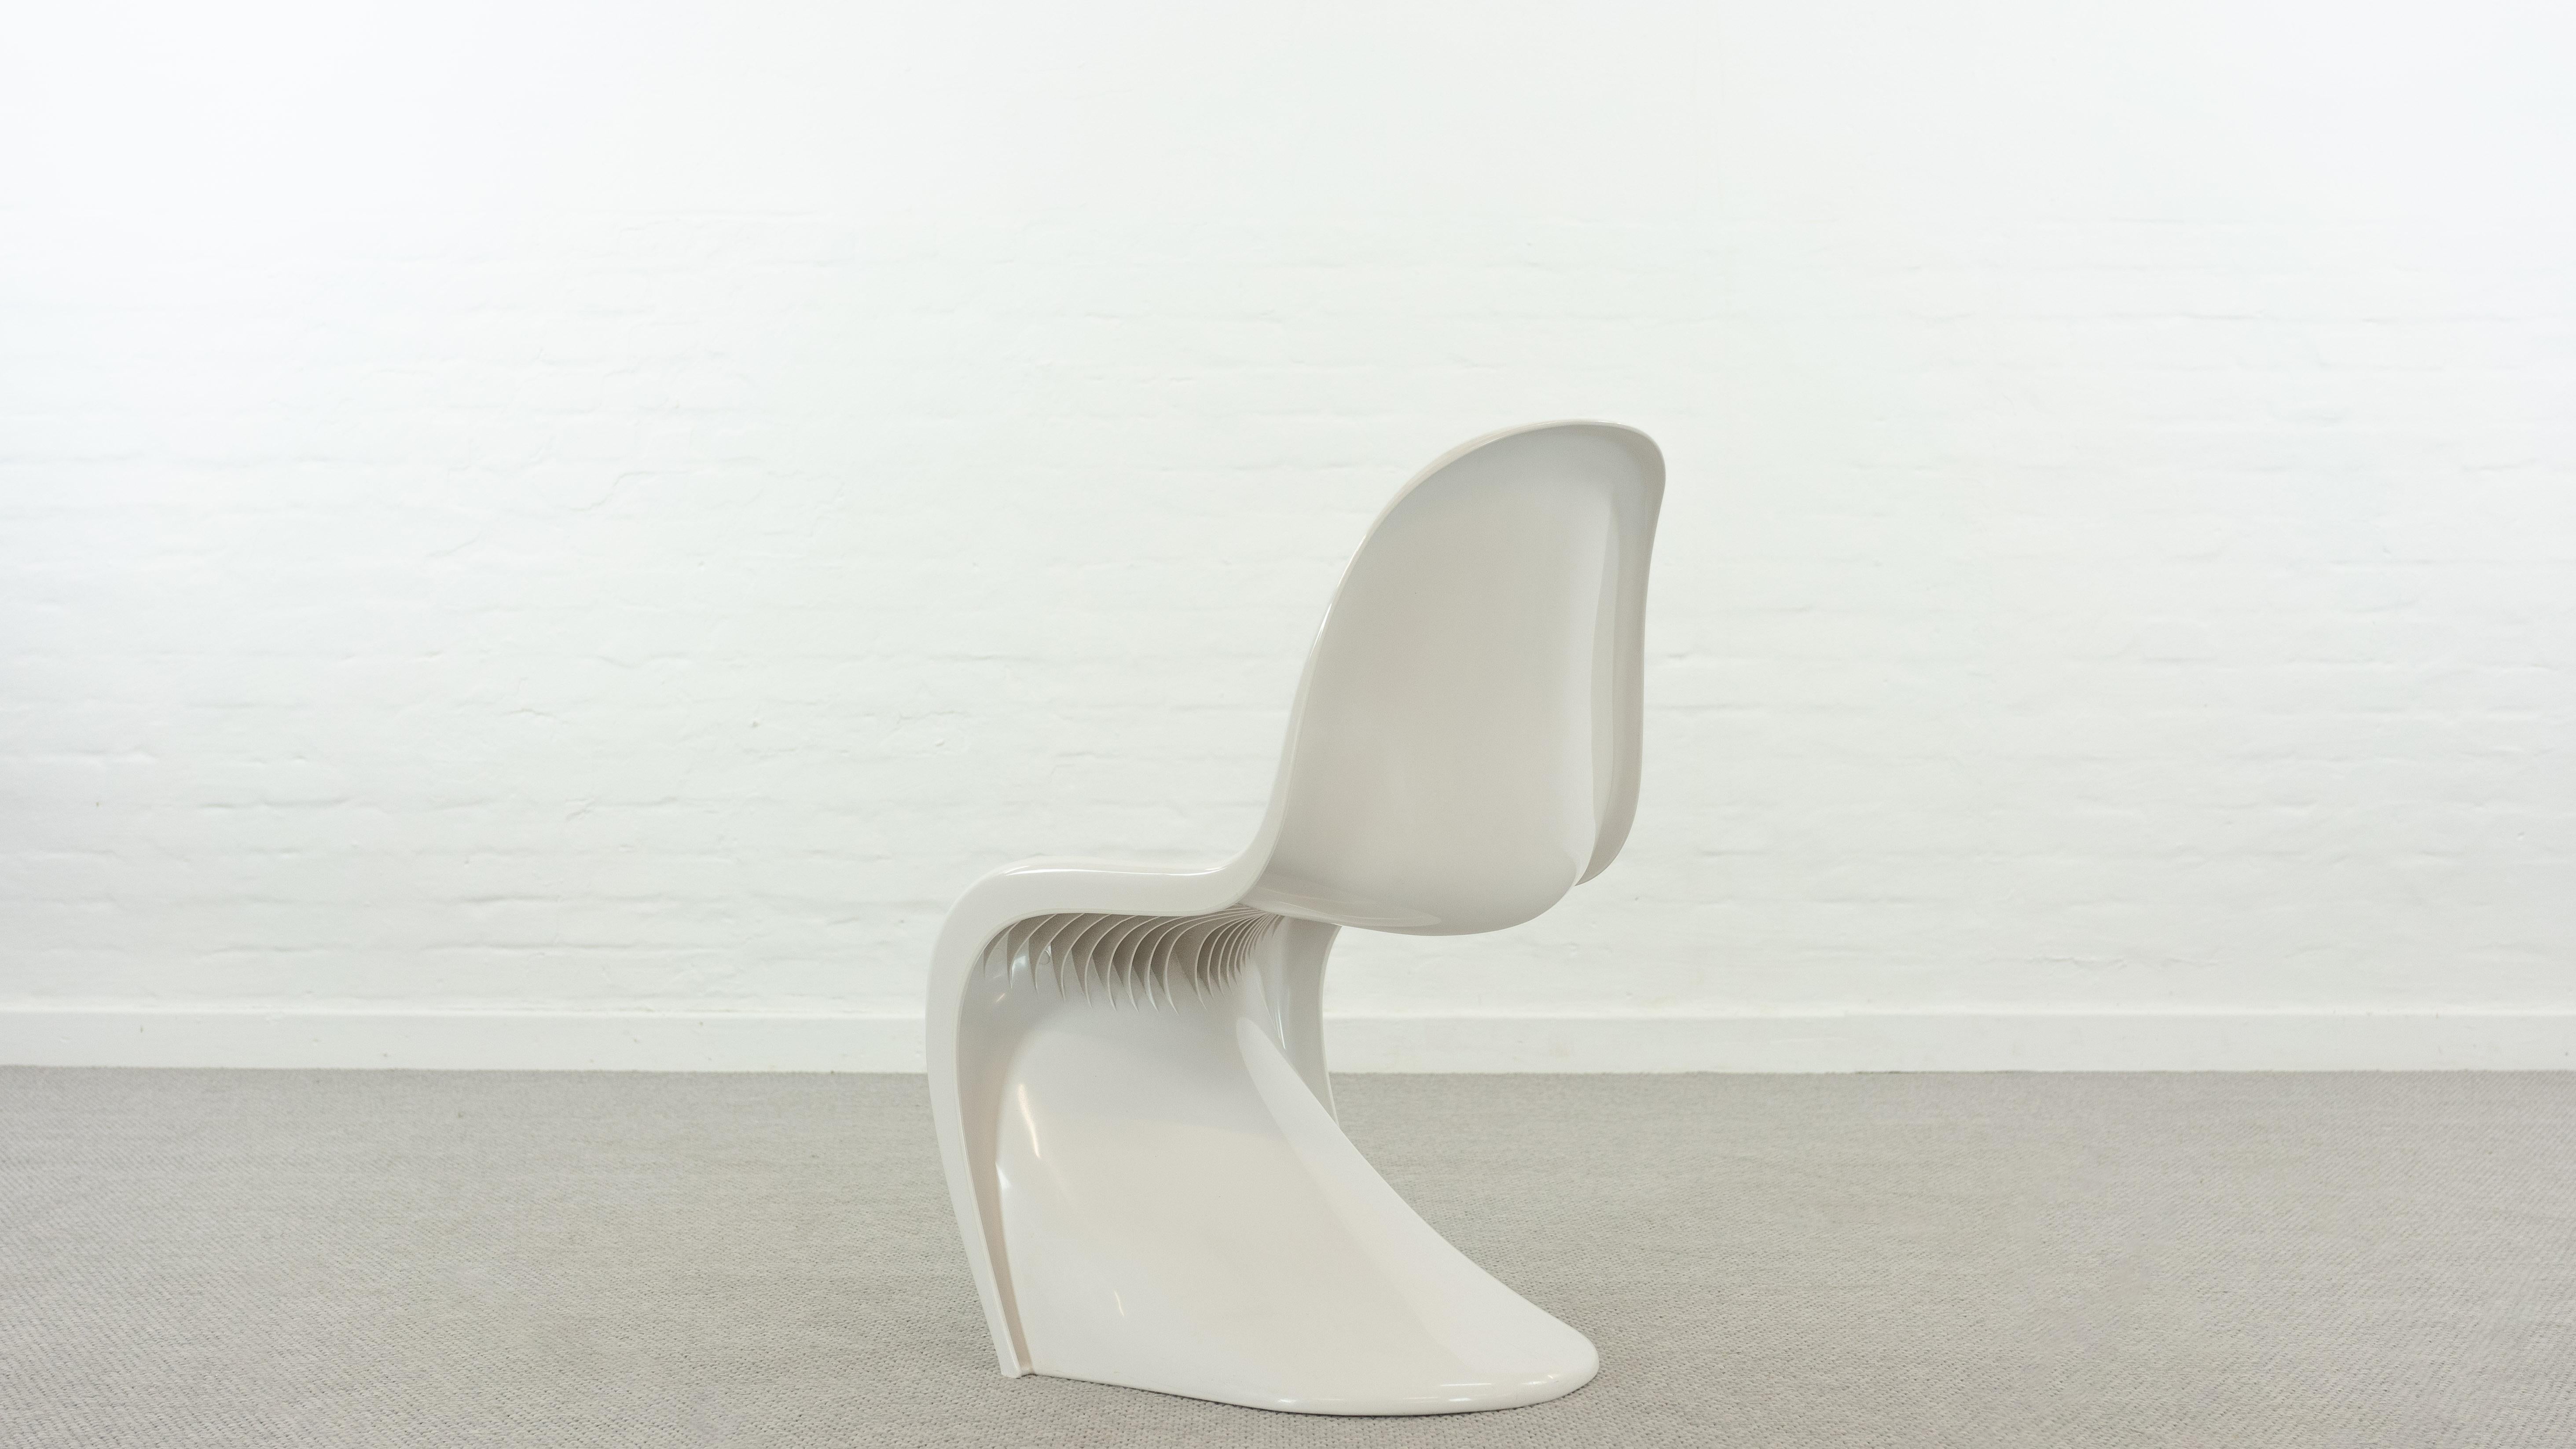 German Panton Chair by Verner Panton for Herman Miller / Fehlbaum, in white 1976 For Sale